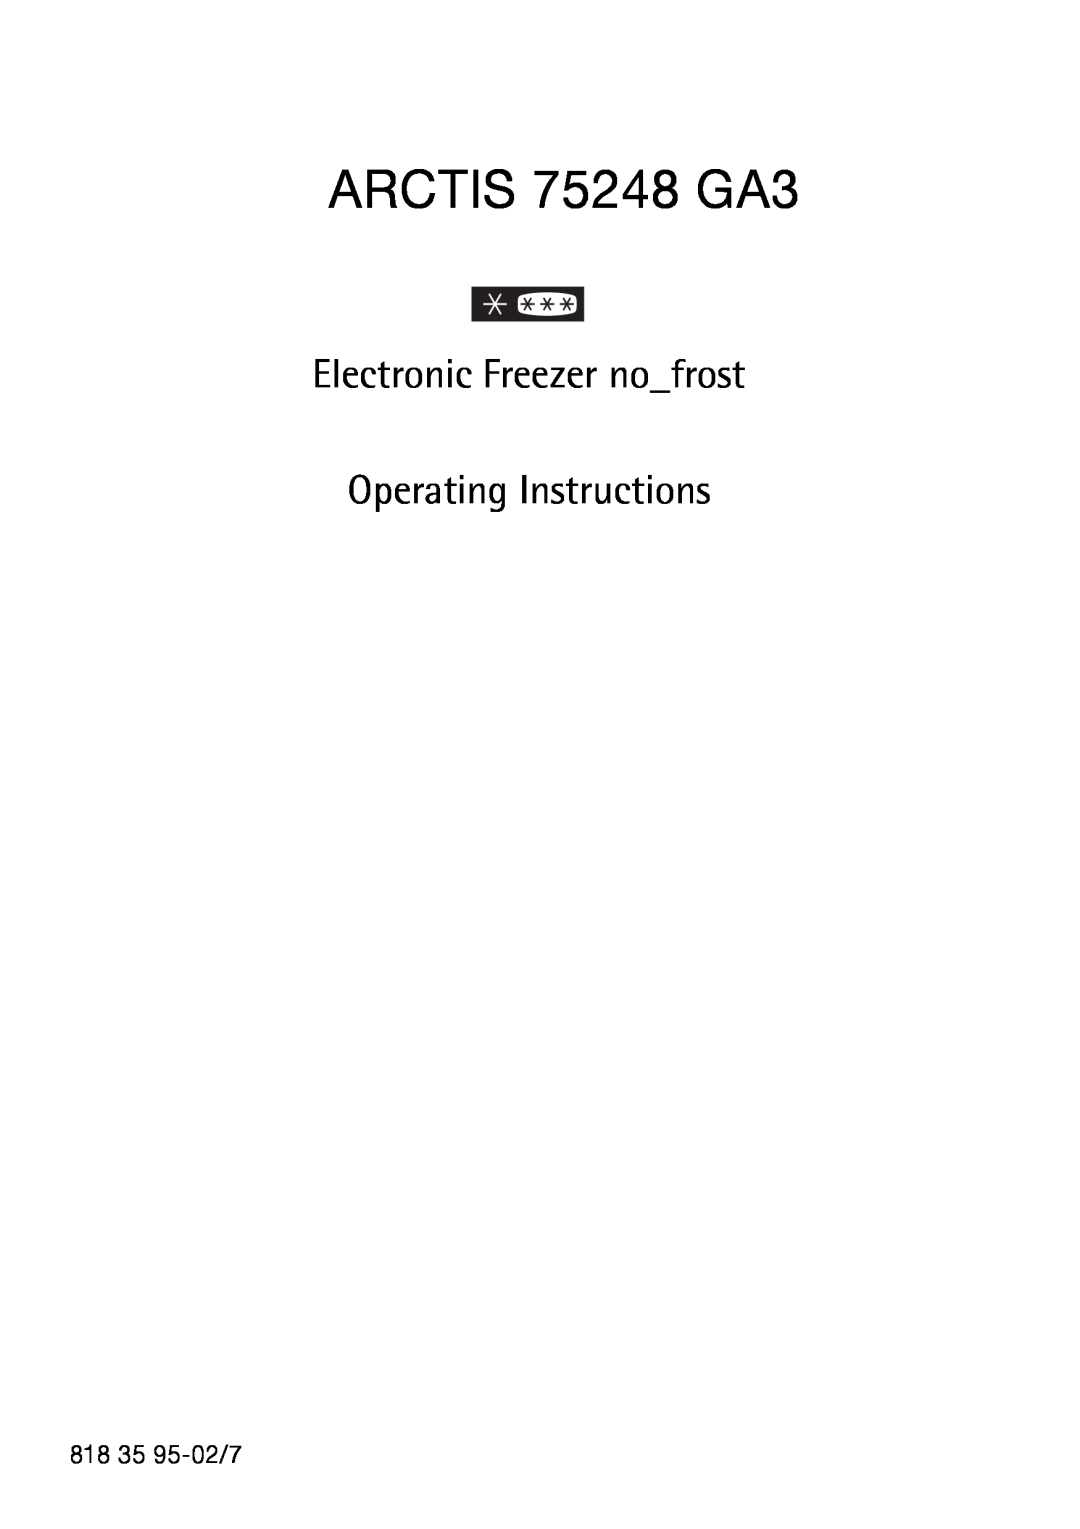 AEG manual ARCTIS 75248 GA3, Electronic Freezer nofrost Operating Instructions 